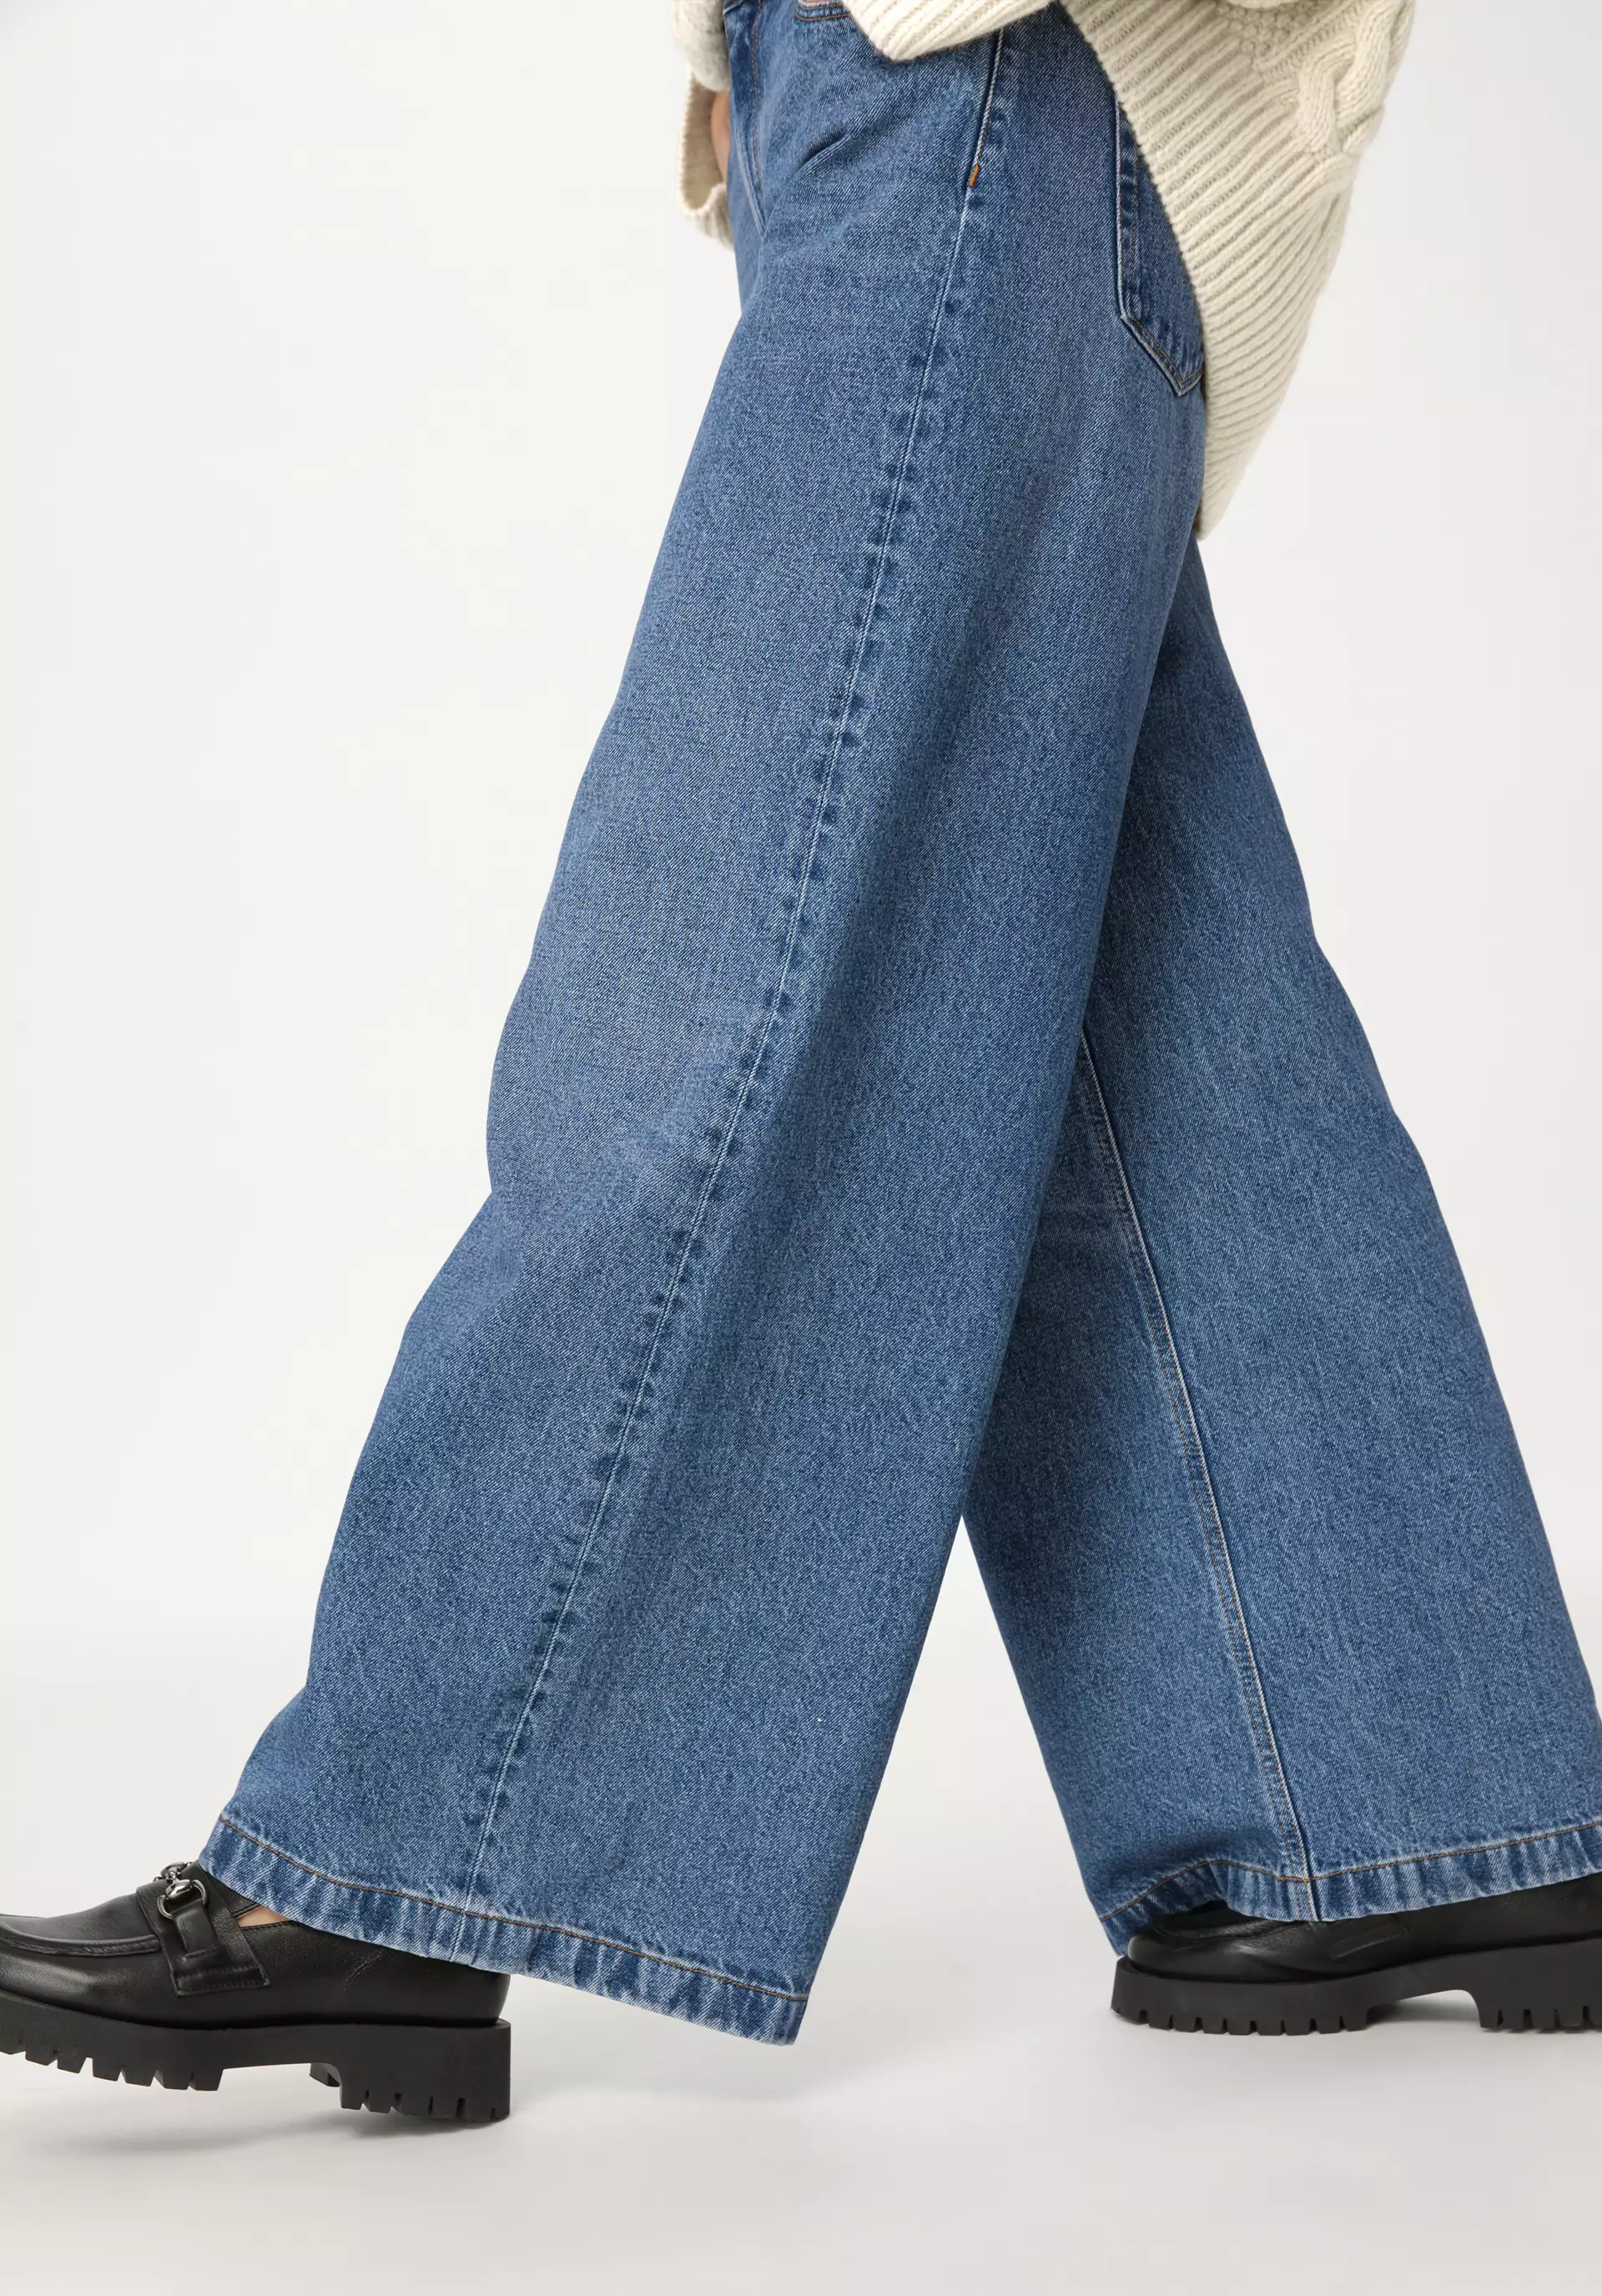 WUNDERKIND X HESSNATUR jeans high rise flared made of pure organic denim - 2